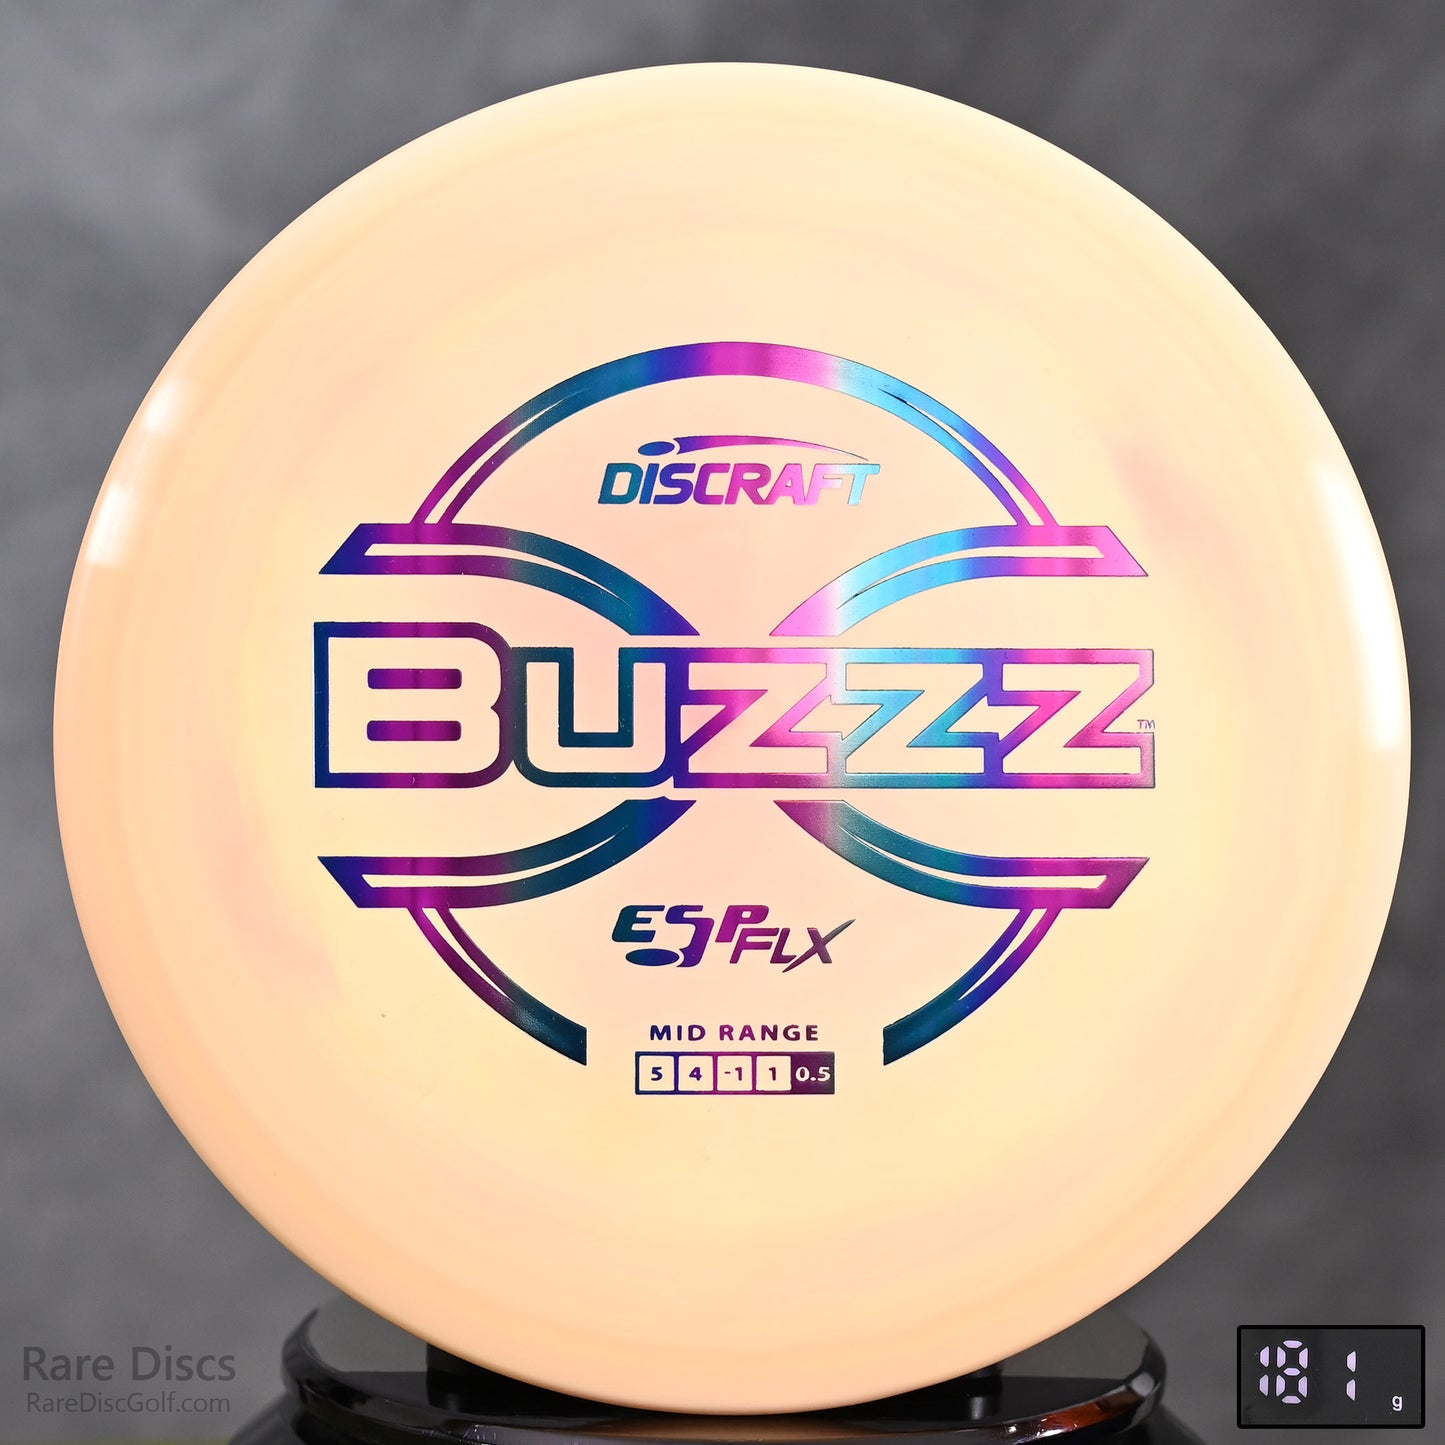 Discraft Buzzz - ESP FLX